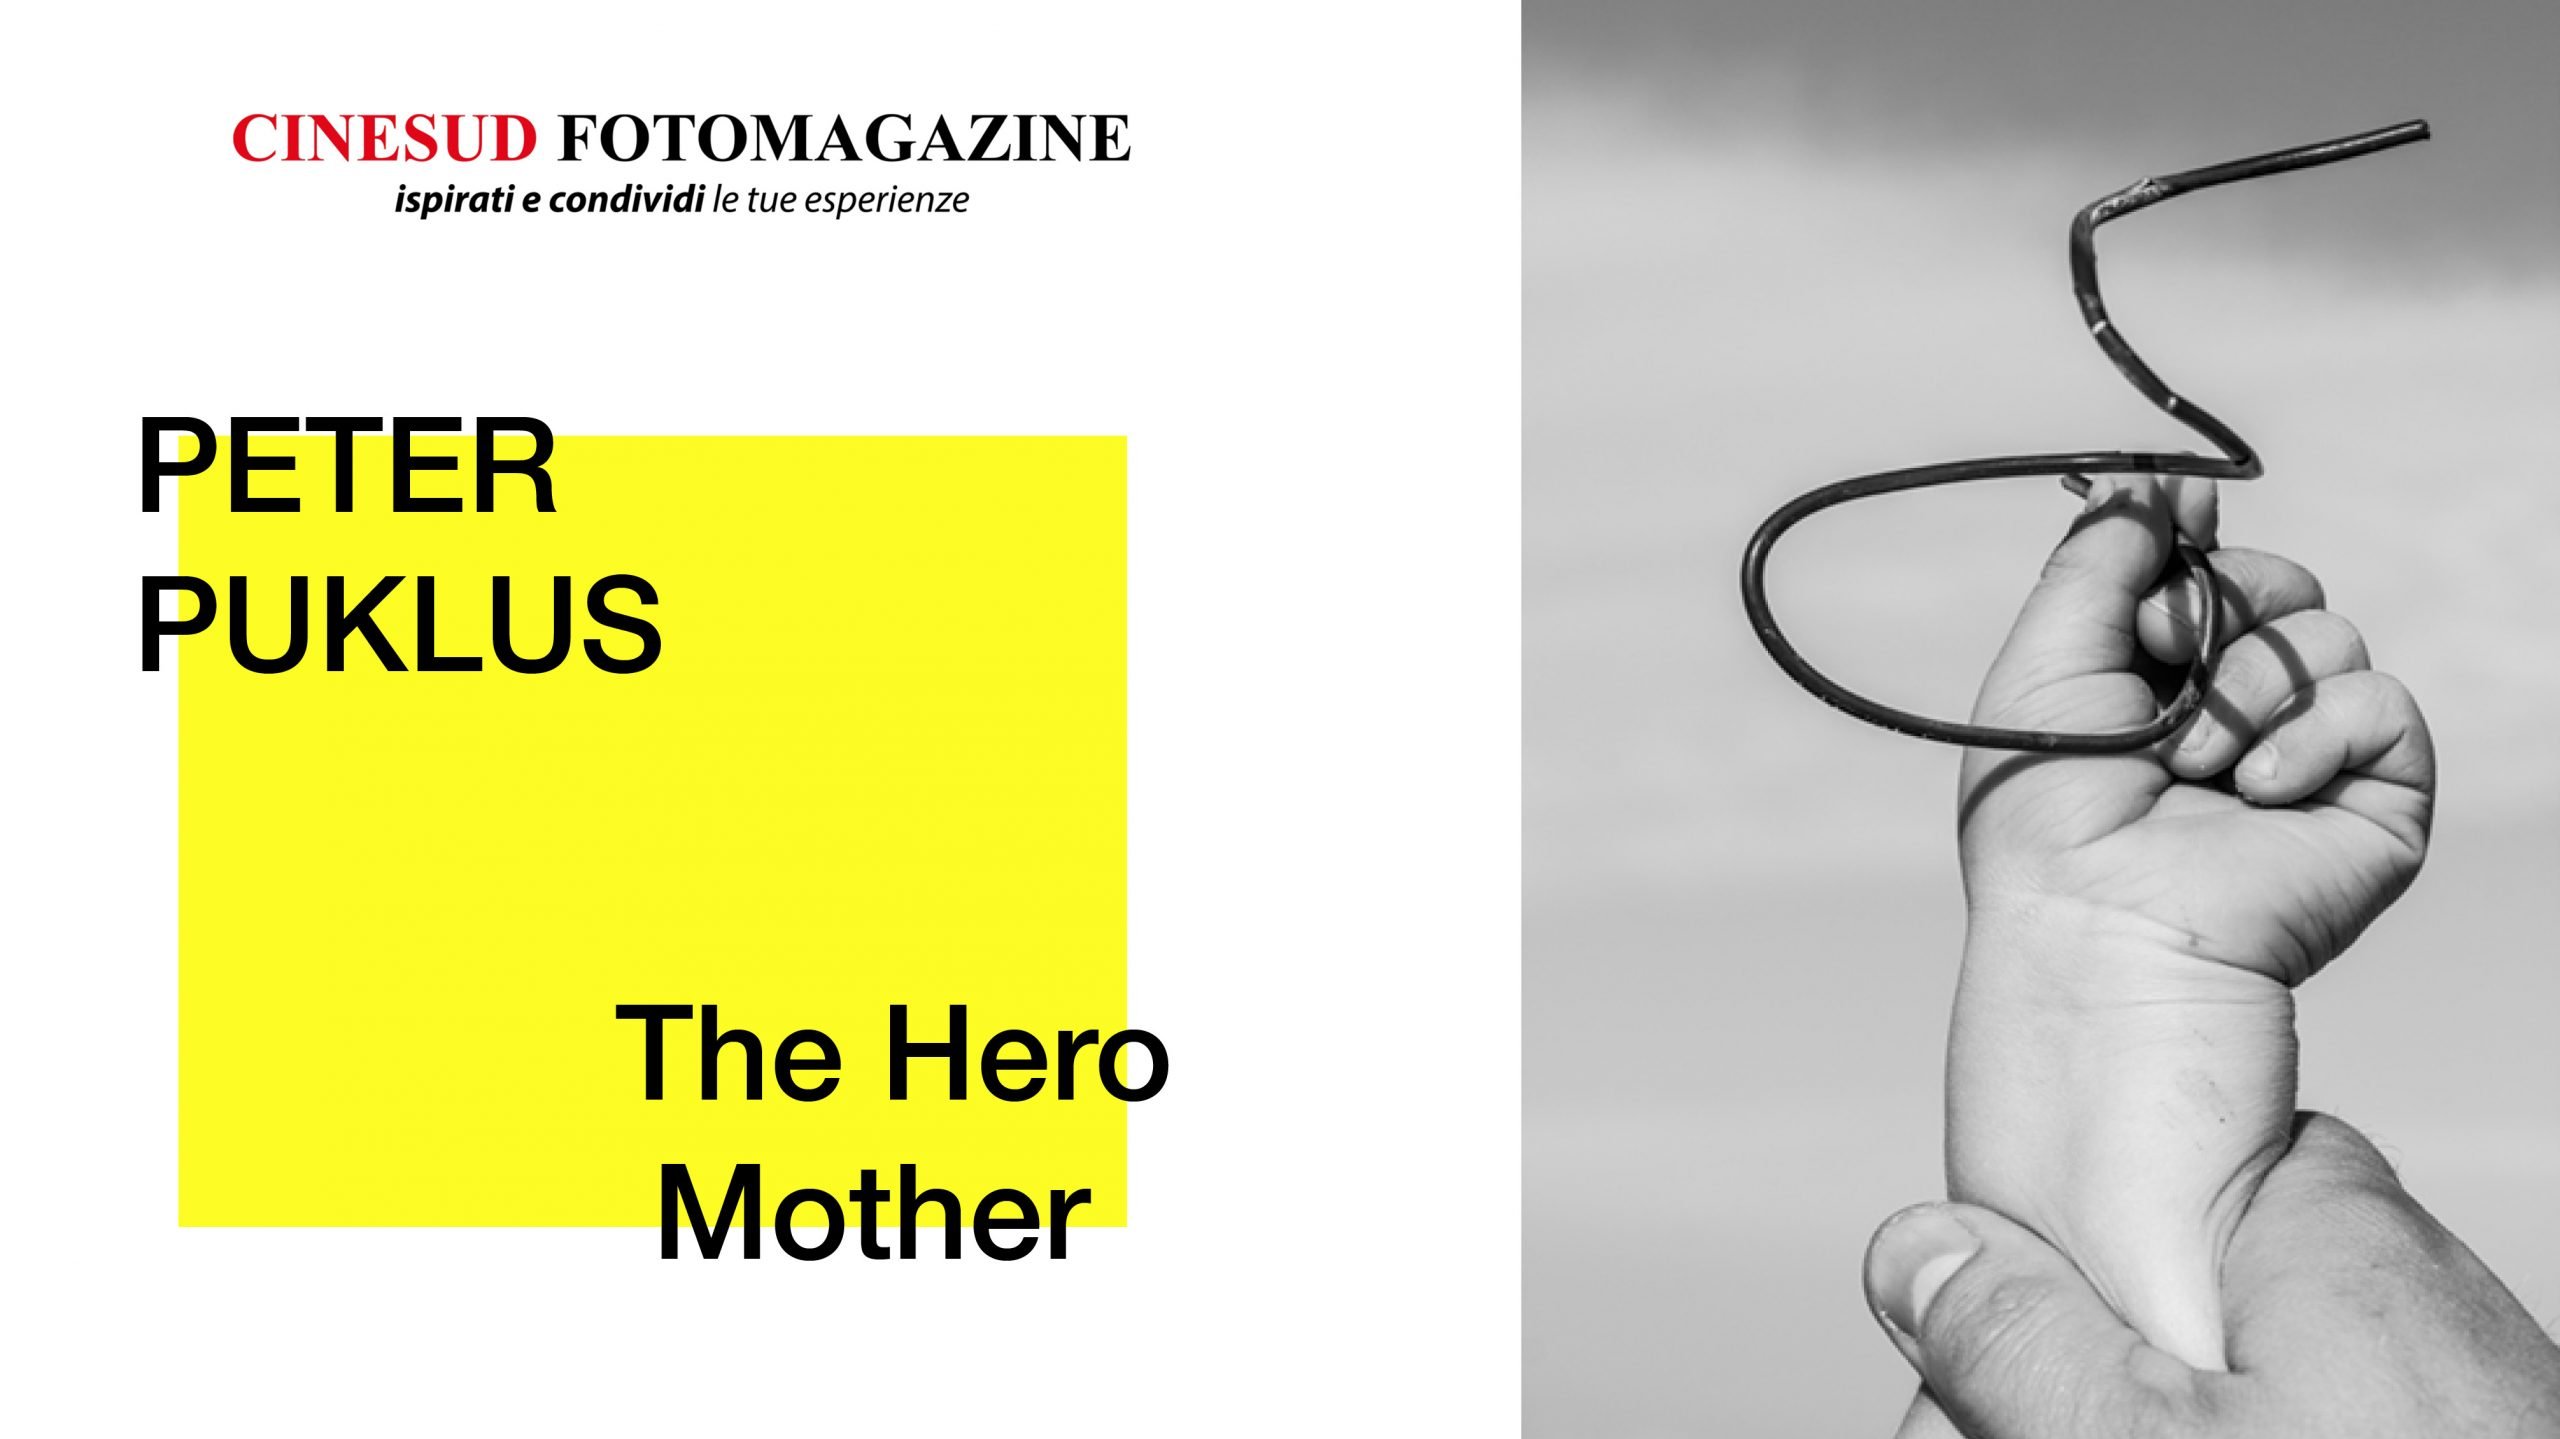 Peter Puklus - "The Hero Mother"